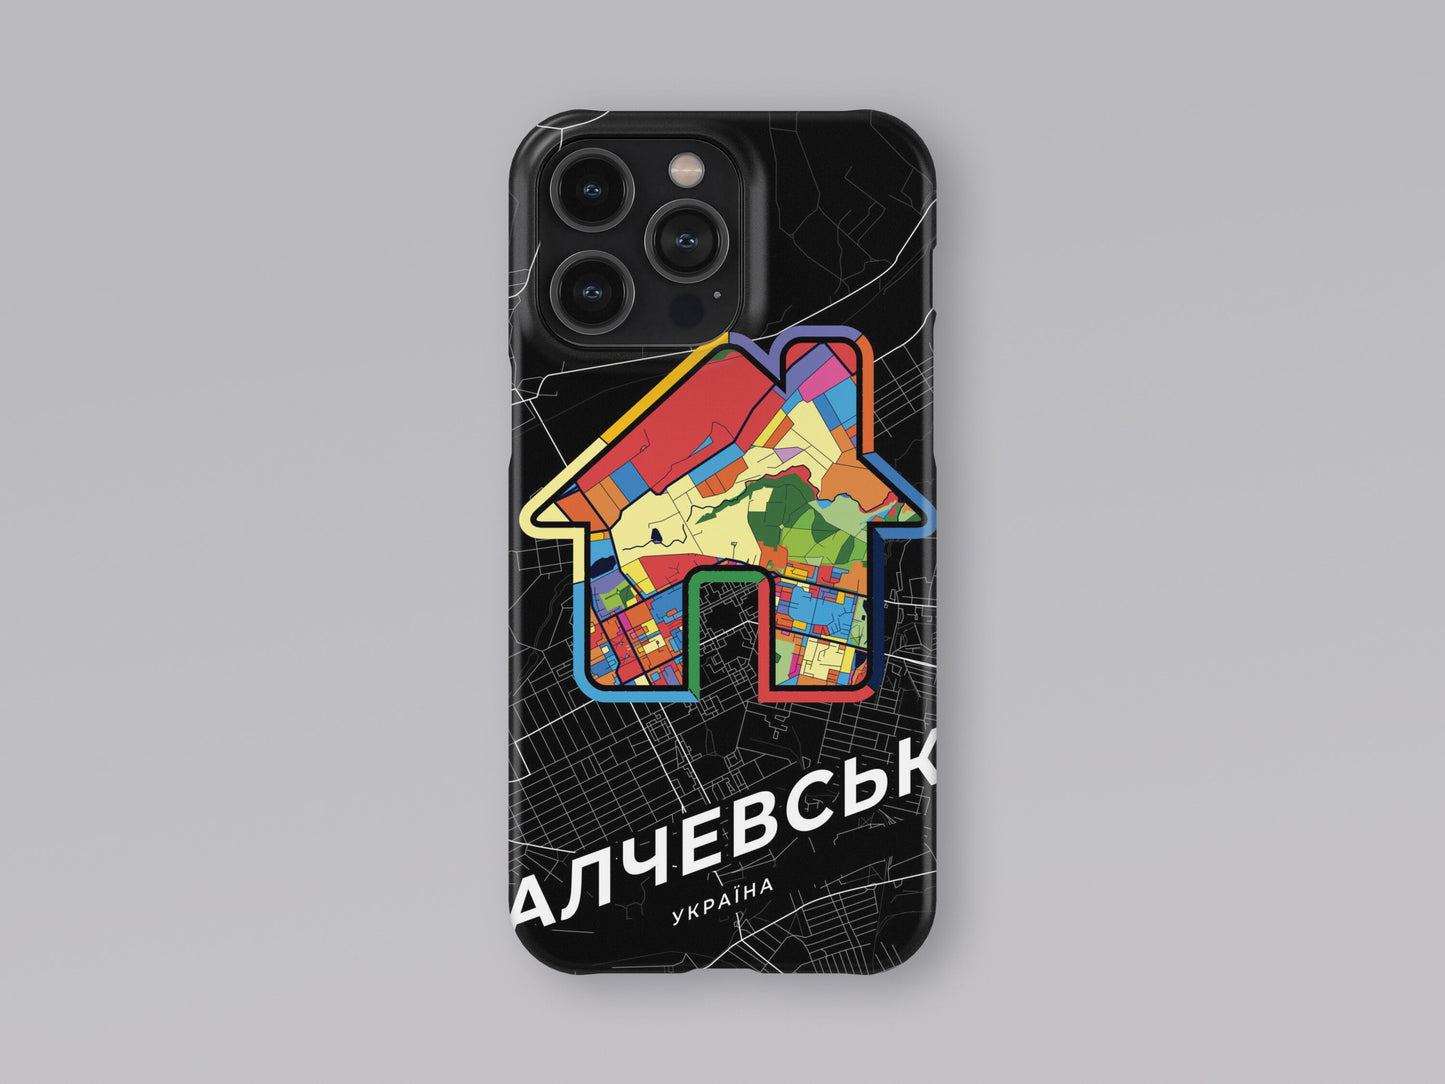 Alchevsk Ukraine slim phone case with colorful icon. Birthday, wedding or housewarming gift. Couple match cases. 3